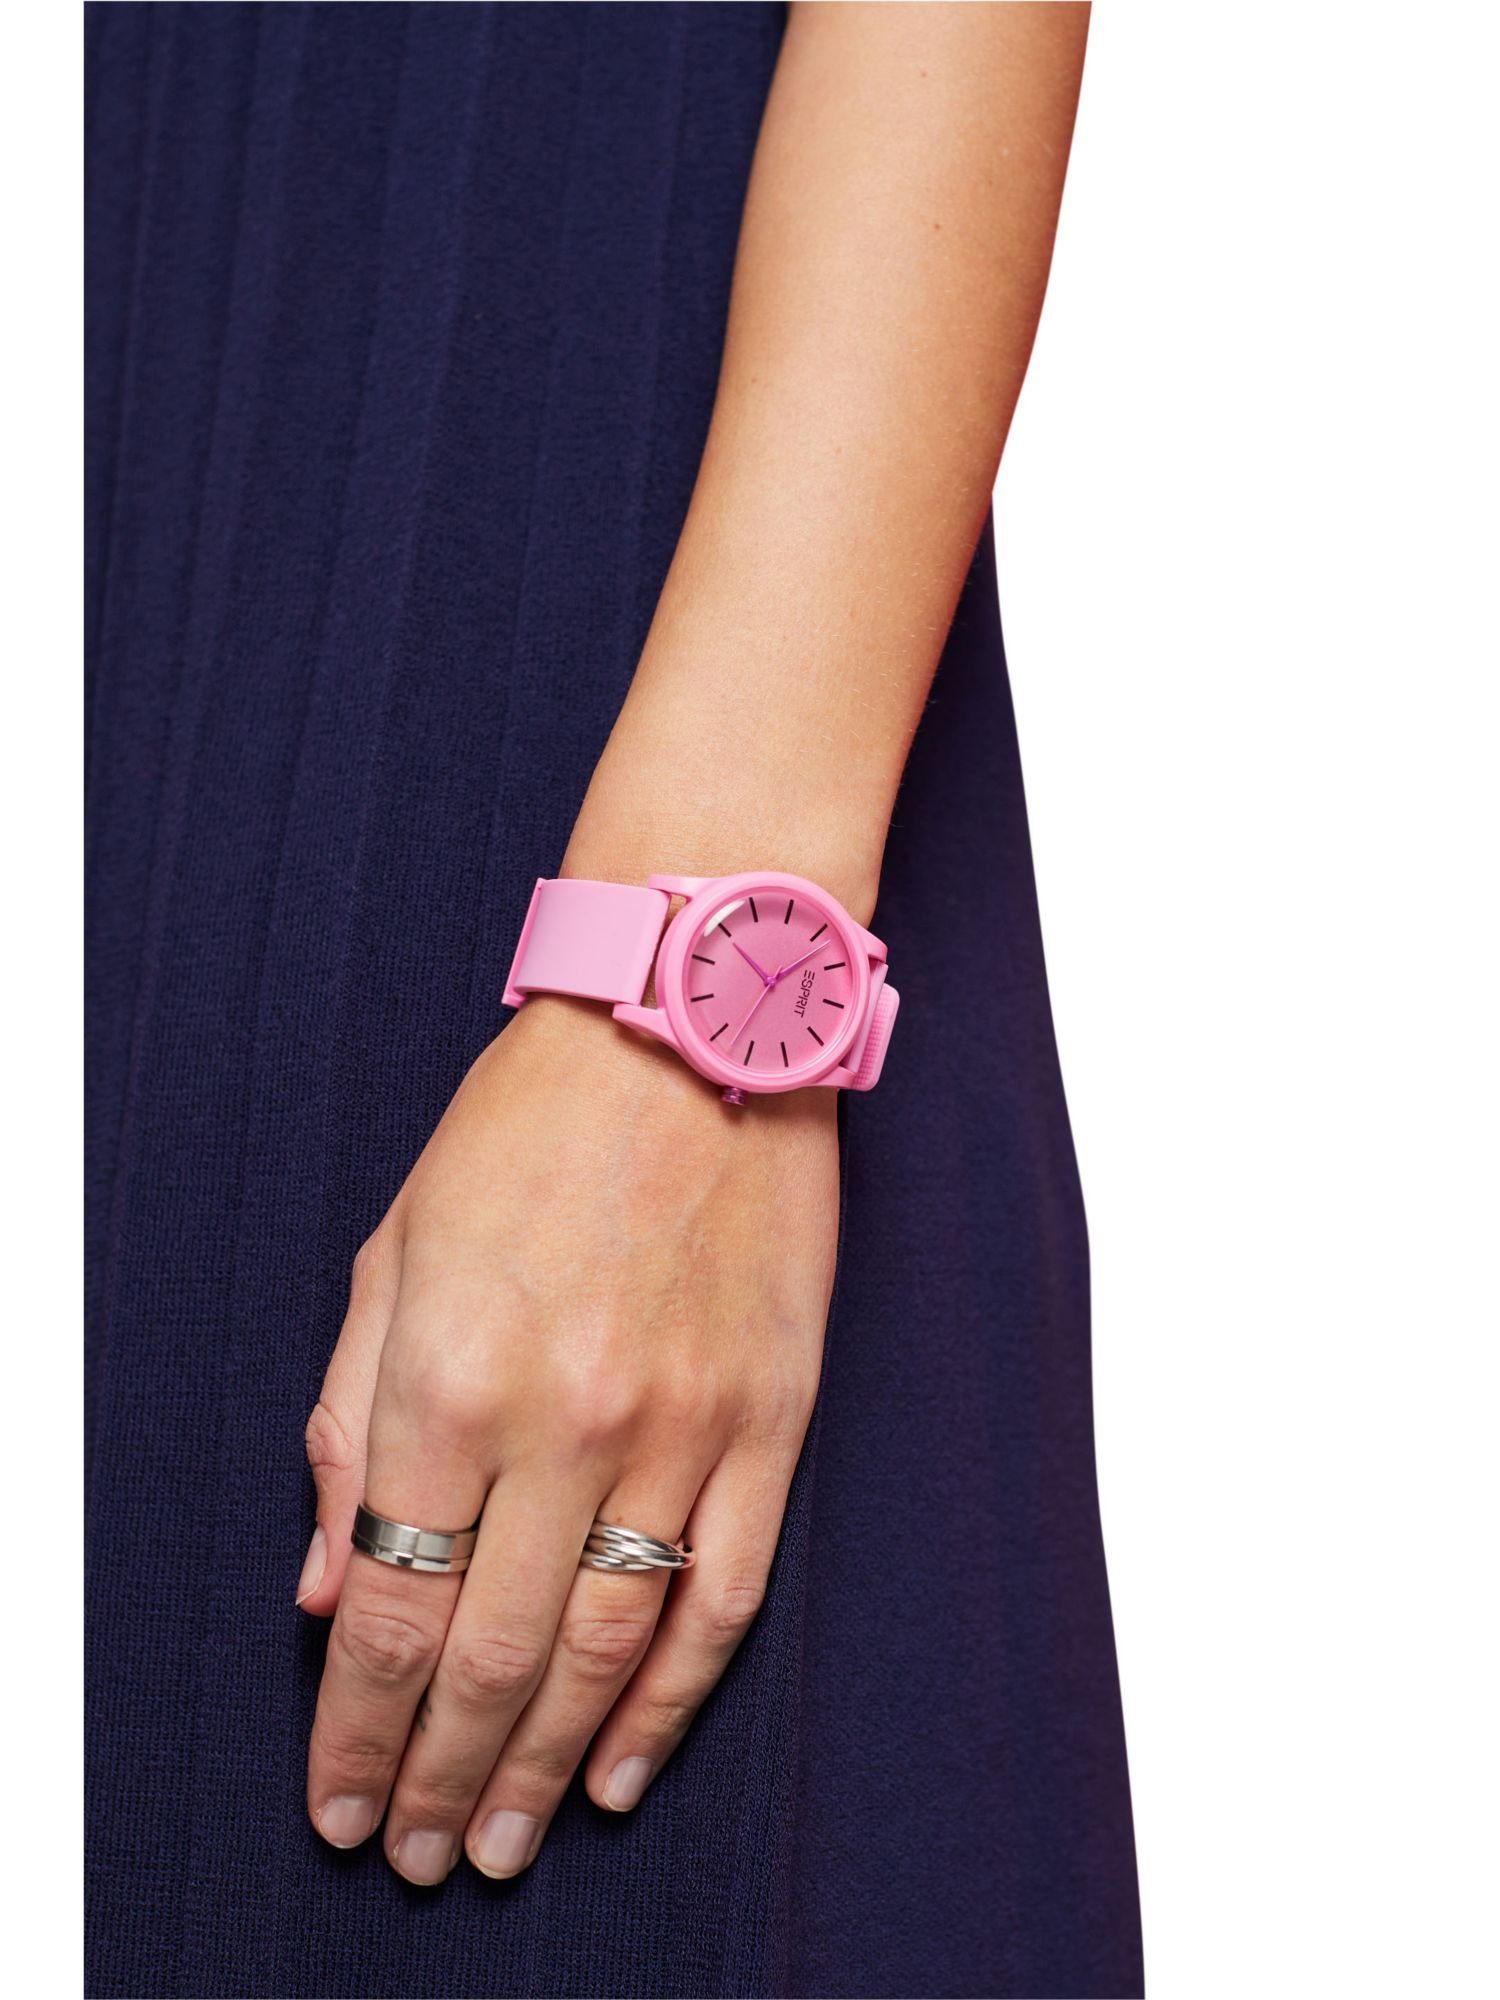 Gummiarmband Esprit Farbige pink mit Chronograph Uhr